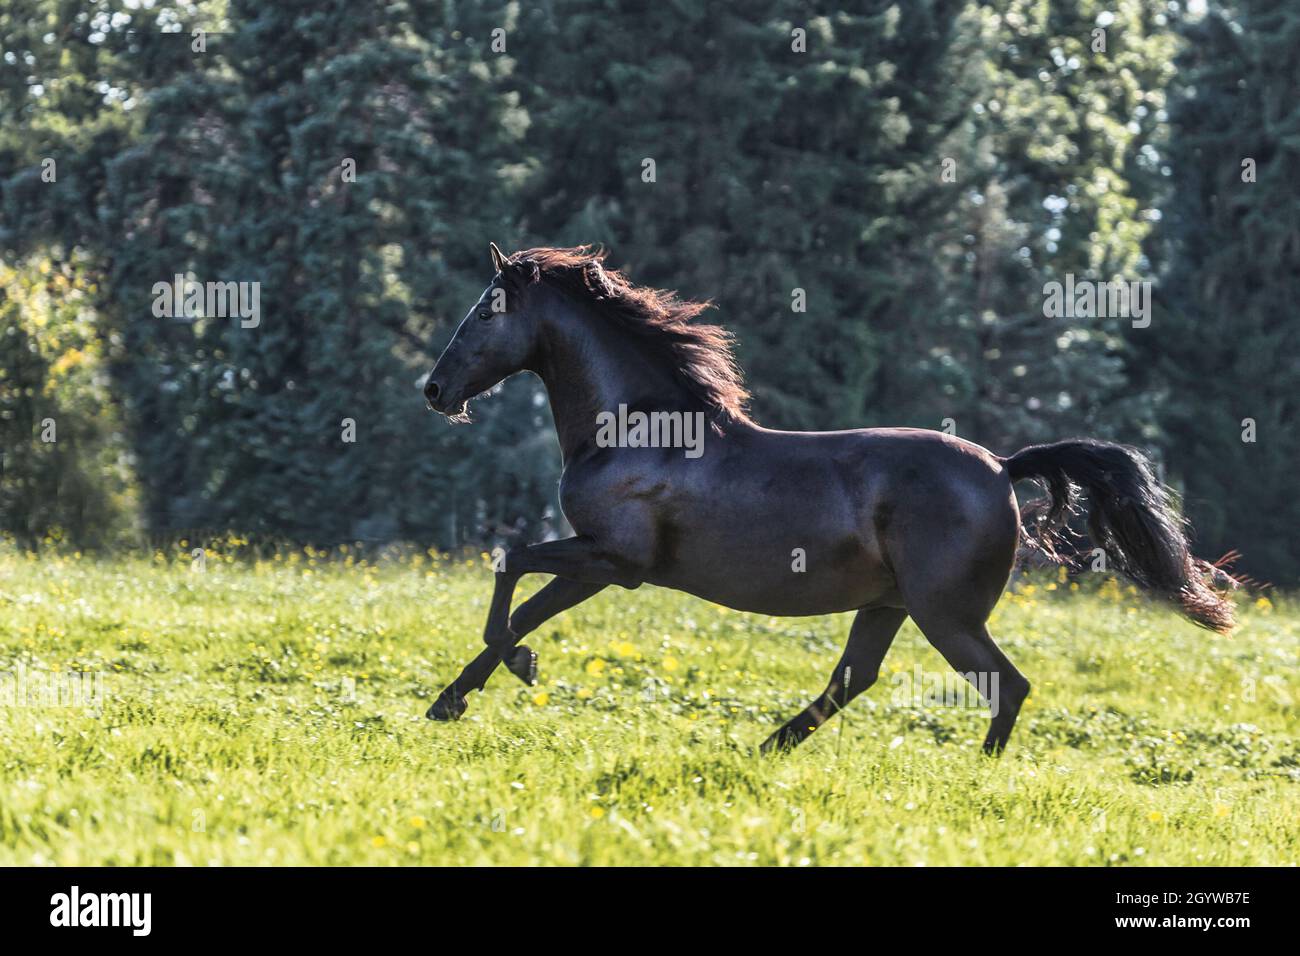 A black pura raza espanola horse galloping on a meadow Stock Photo